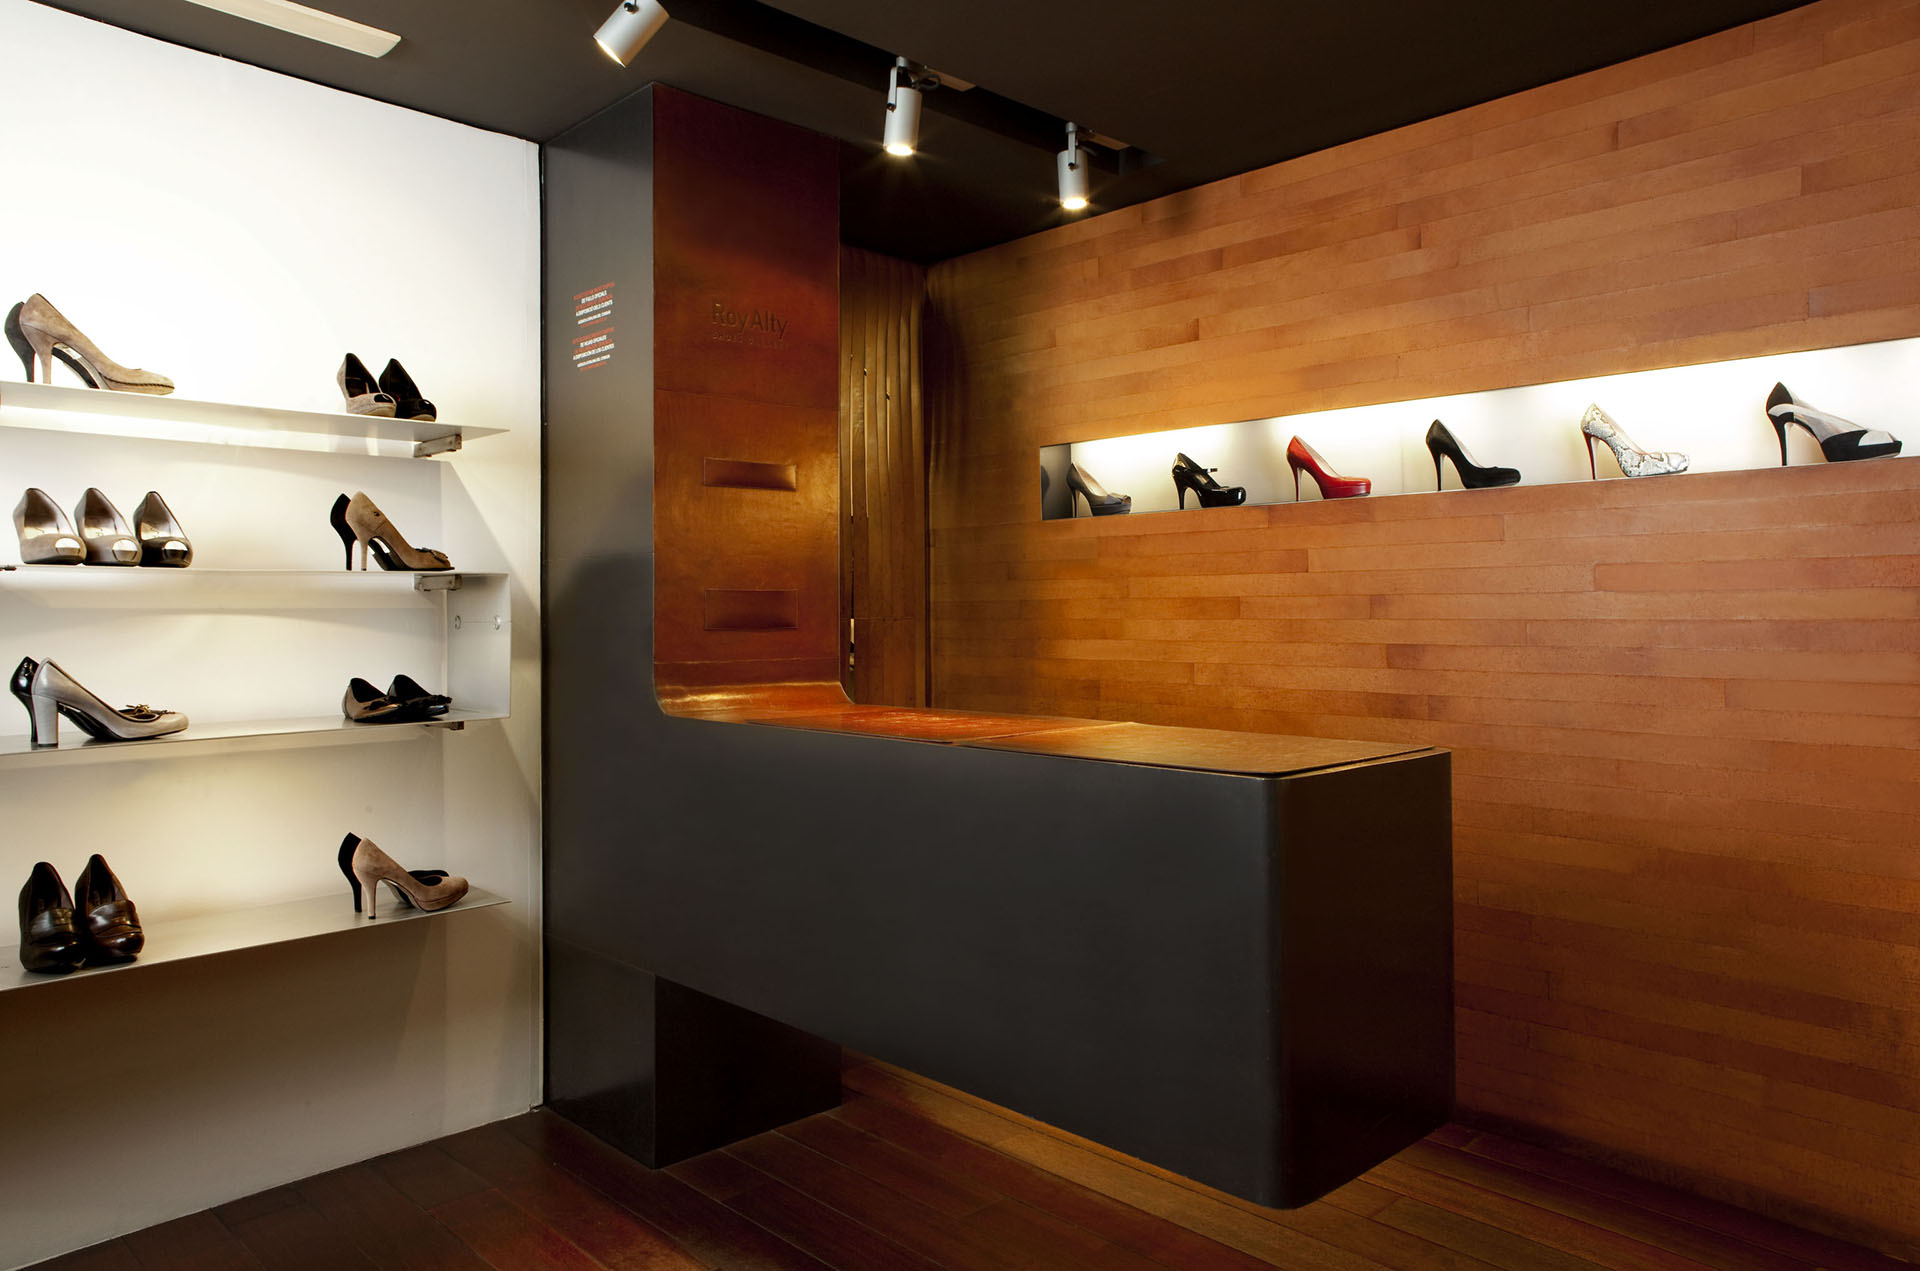 Joan Sèculi Photography - Royalty Shoe Shop Barcelona